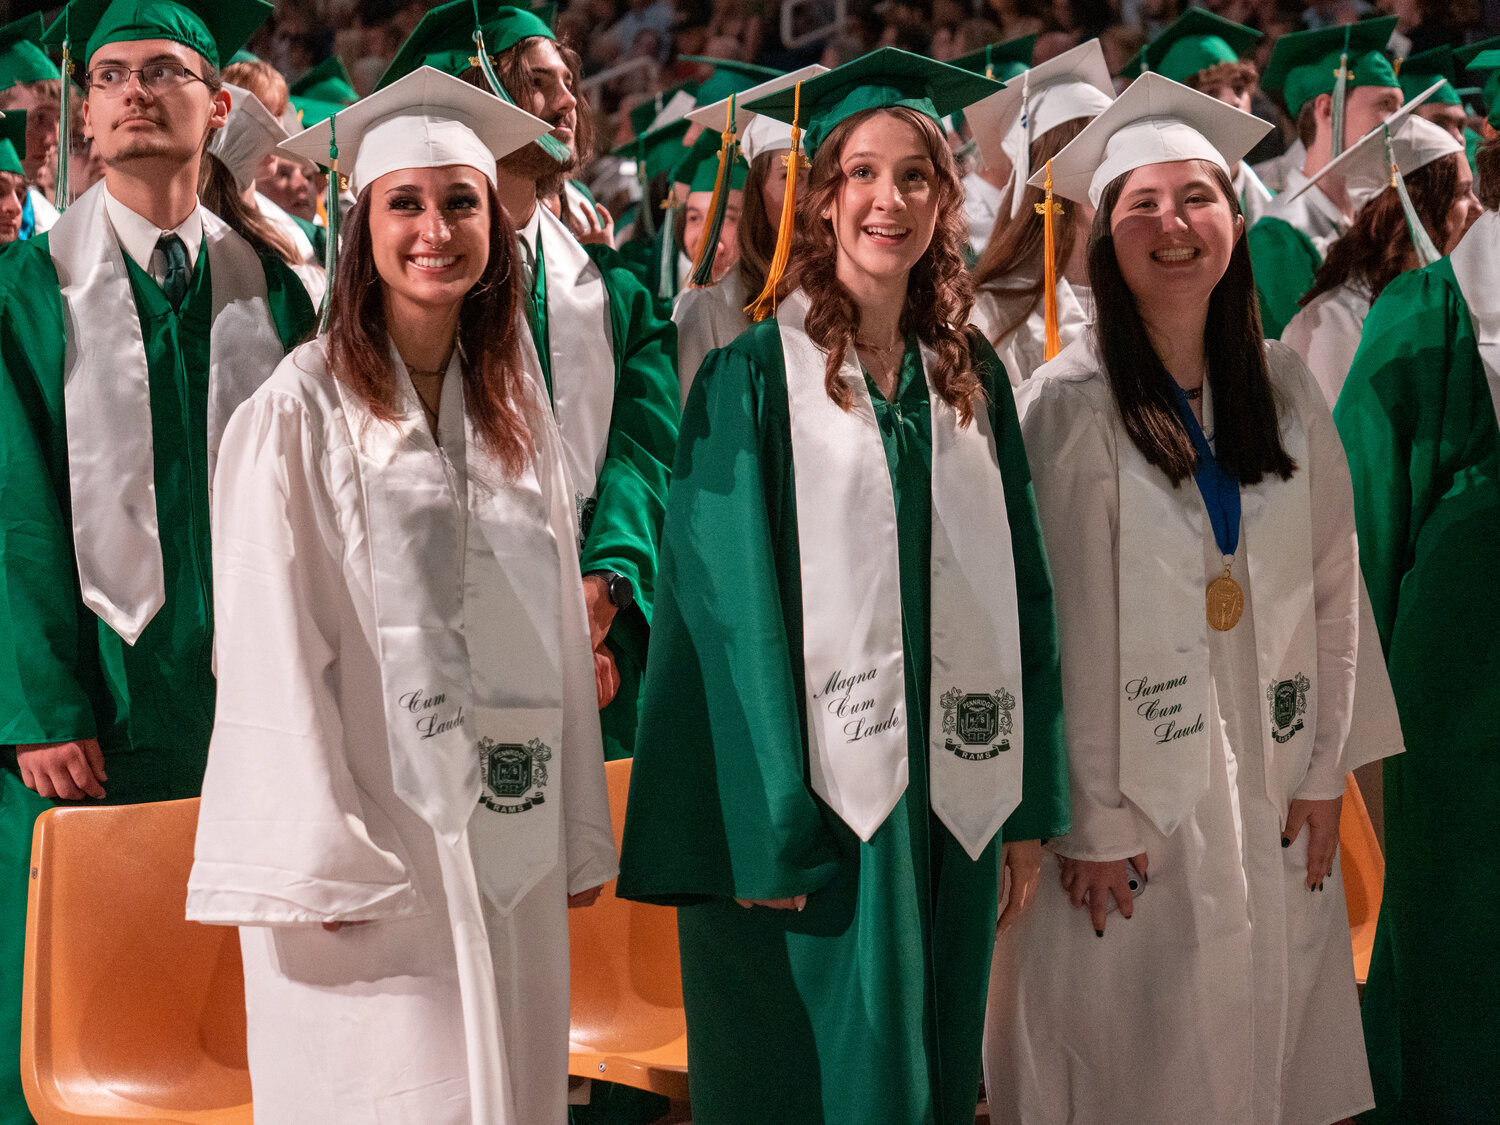 All smiles Tuesday, members of the Pennridge High School Class of 2023 graduate.